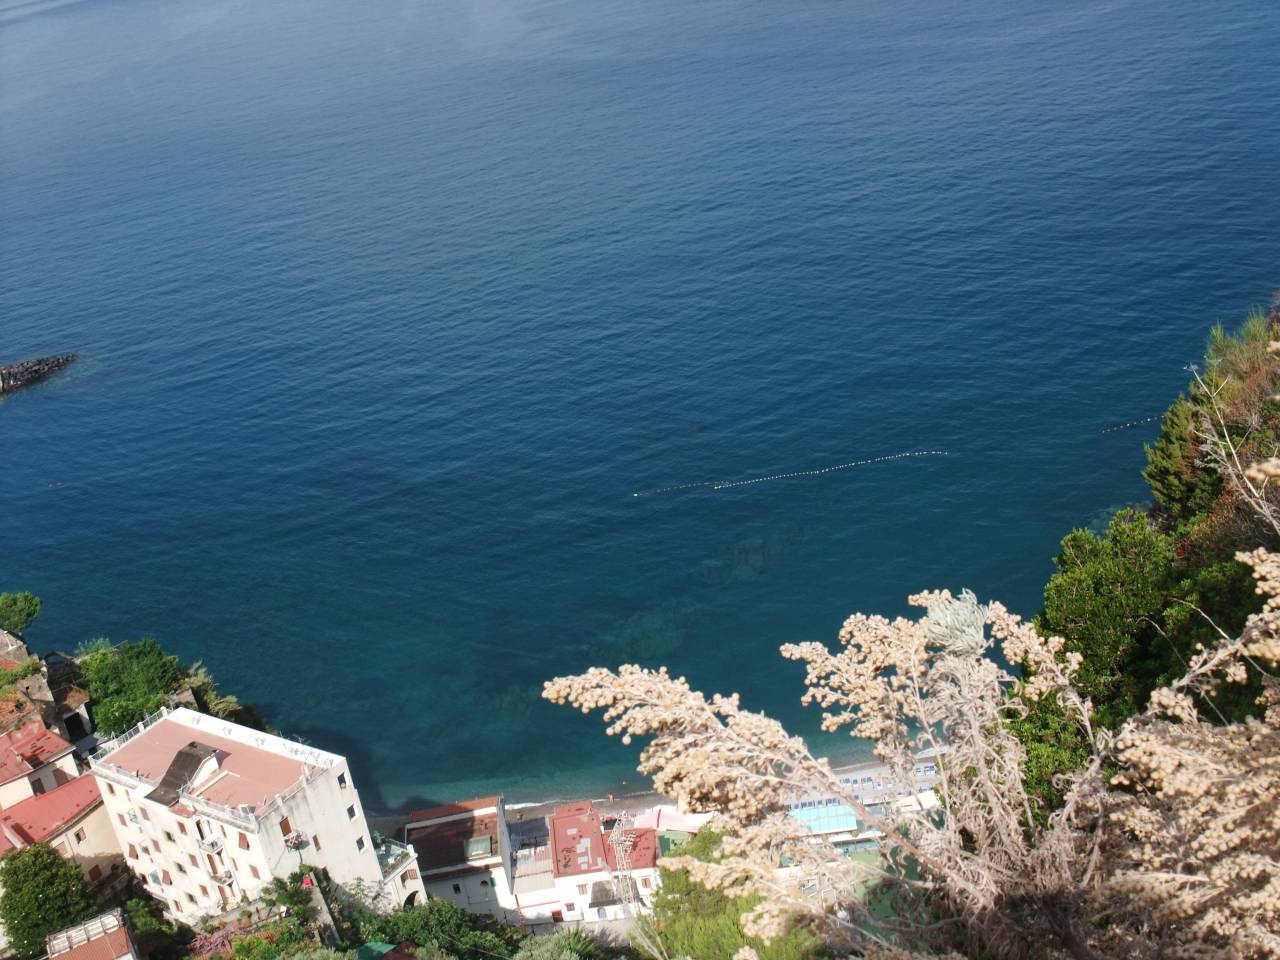 La côte Amalfitaine: DSCF8687